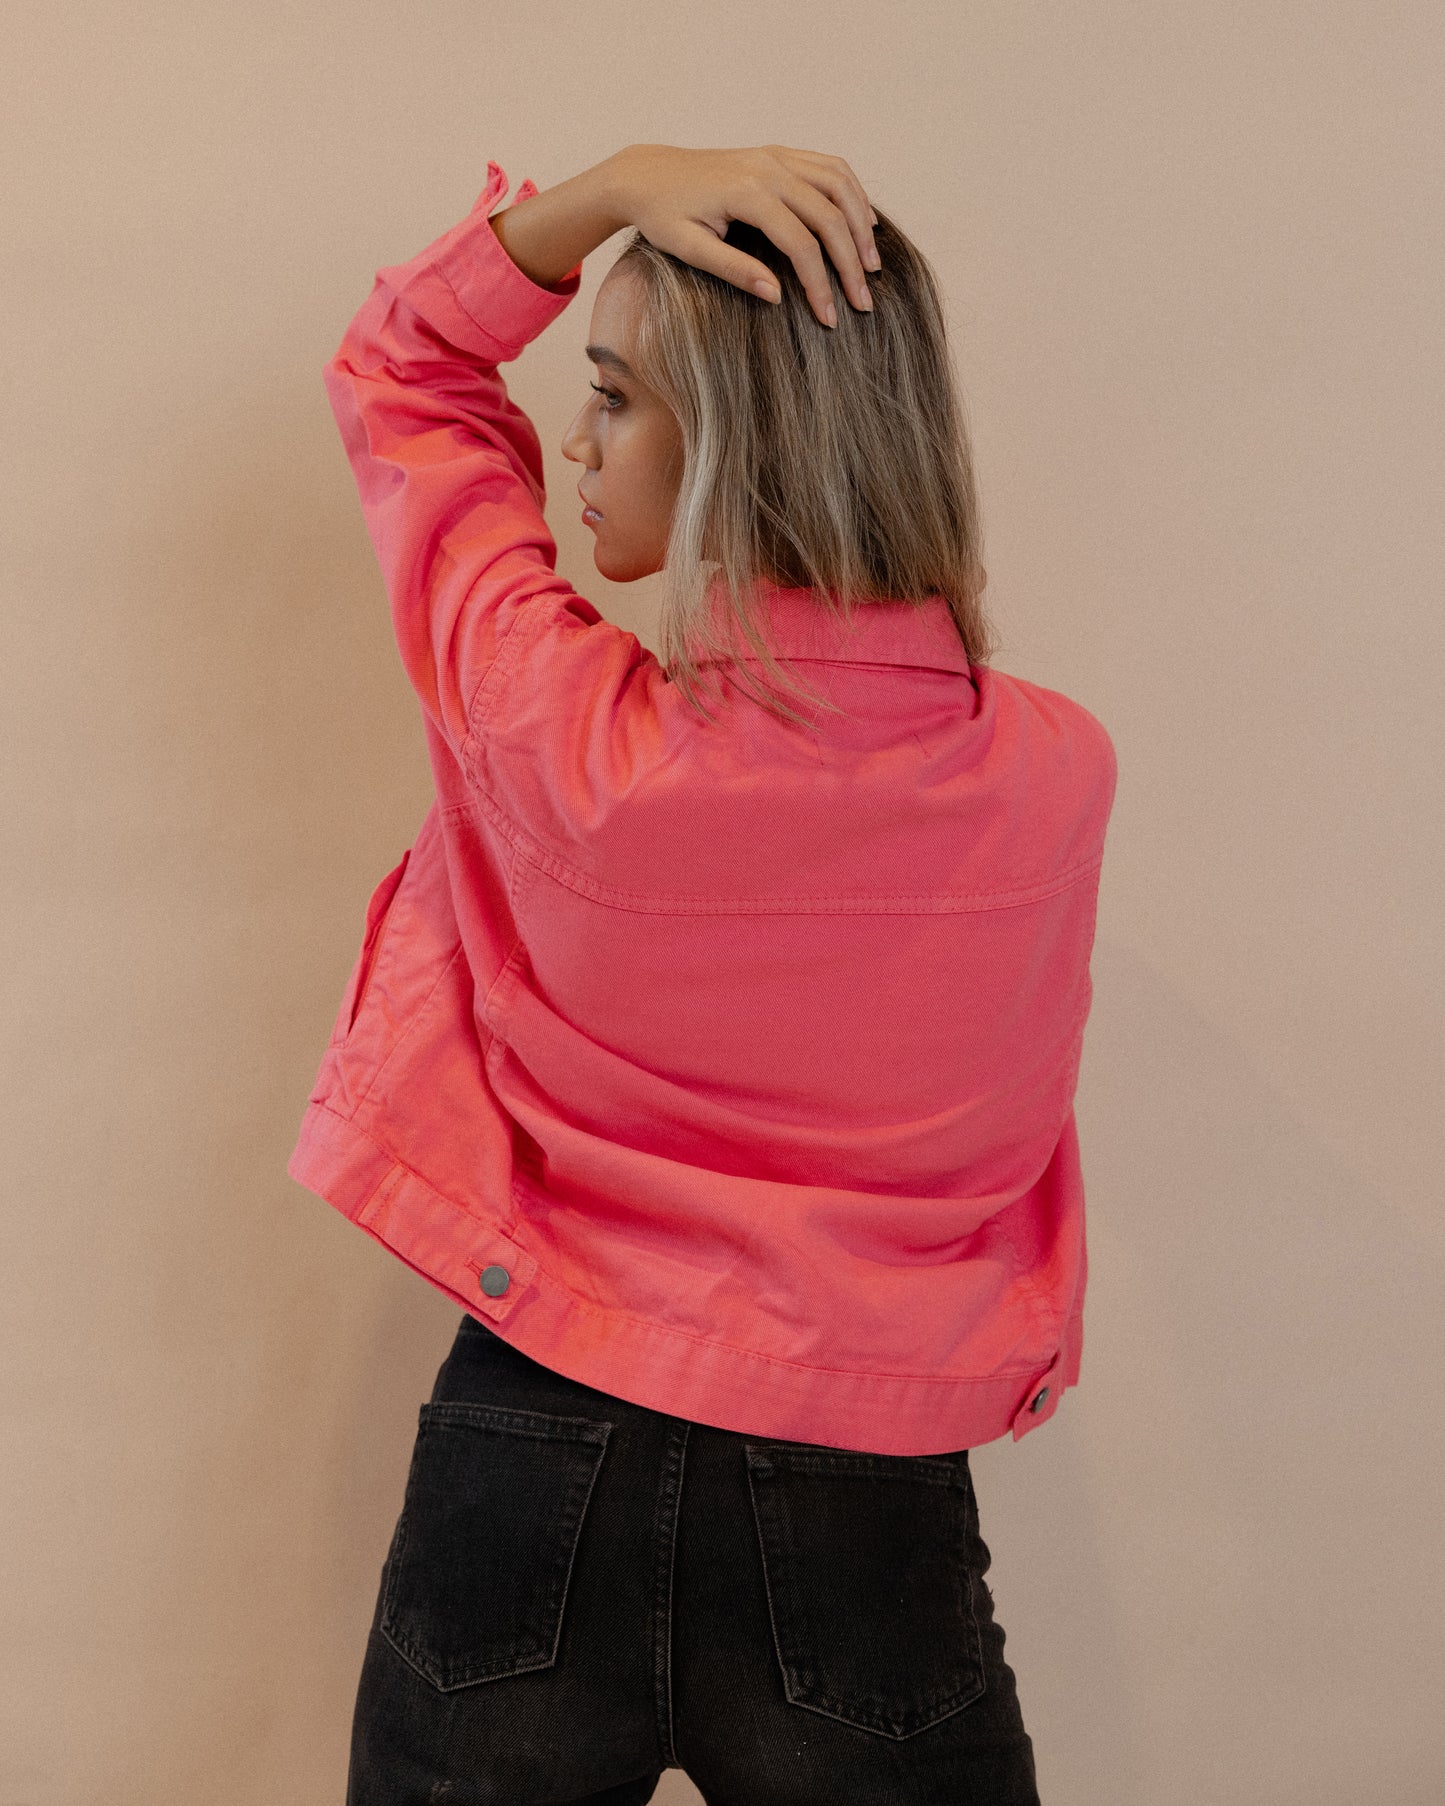 Oversized Pink Denim Jacket - Code 558